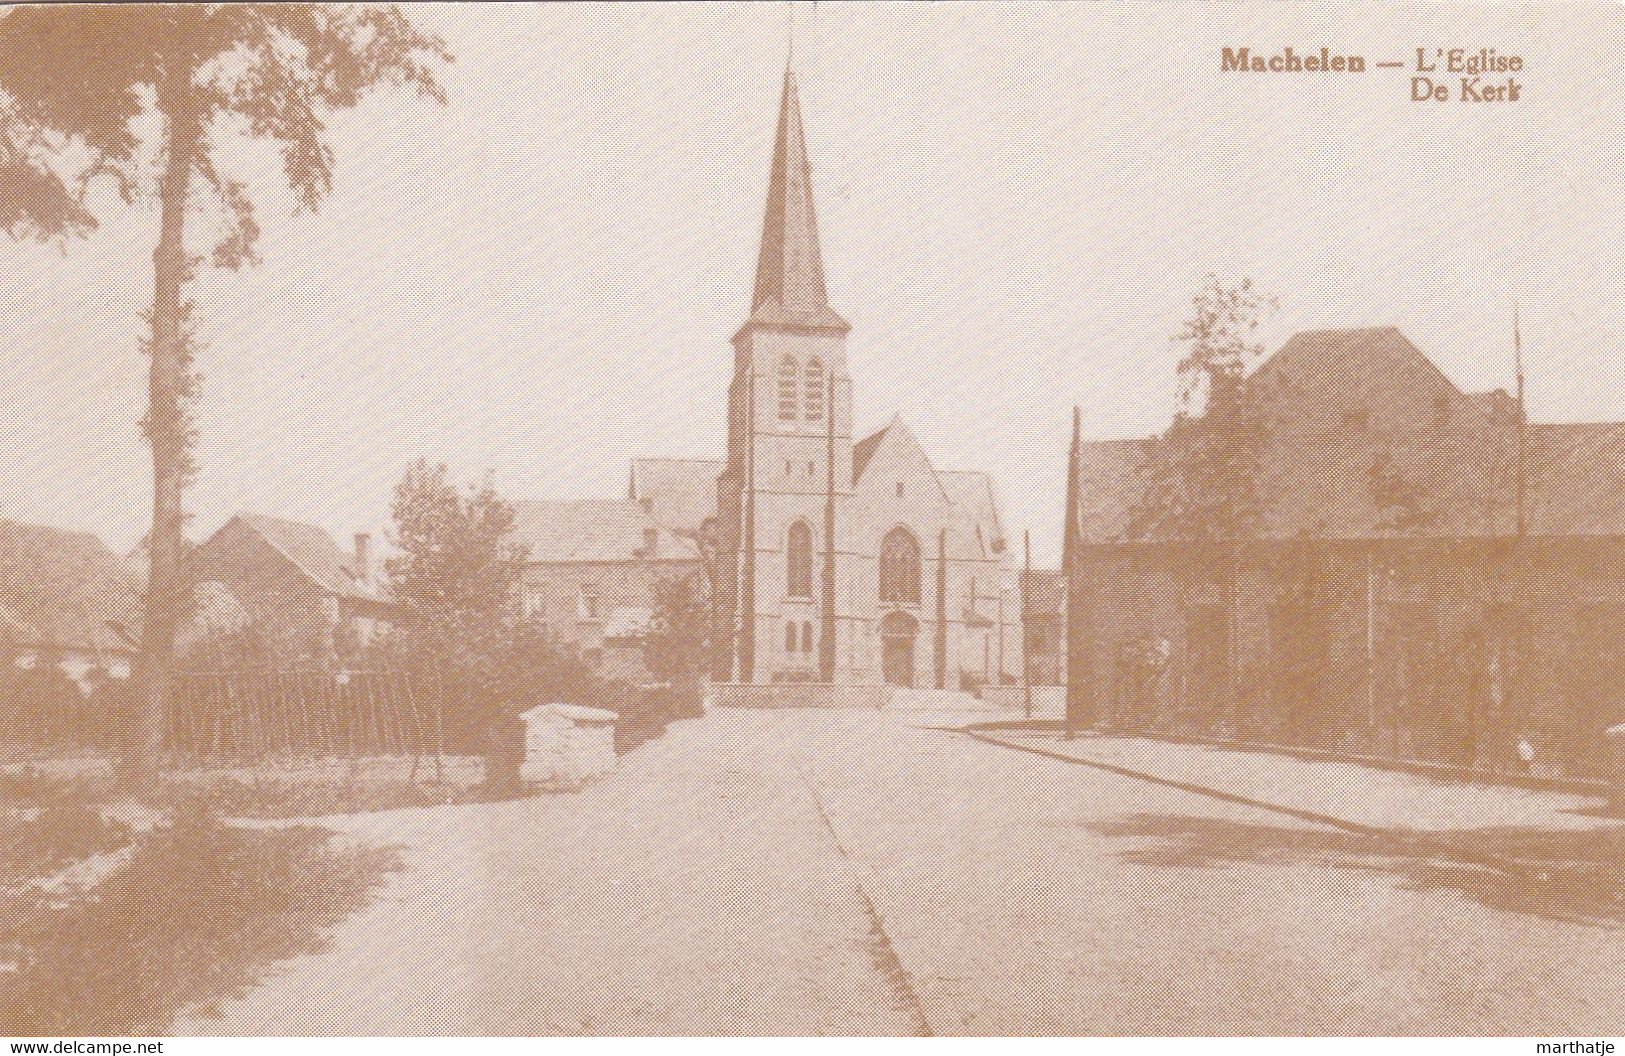 Machelen - De Kerk - L'Eglise - Herdruk Gemeenteraadsverkiezingen 1983 - Machelen